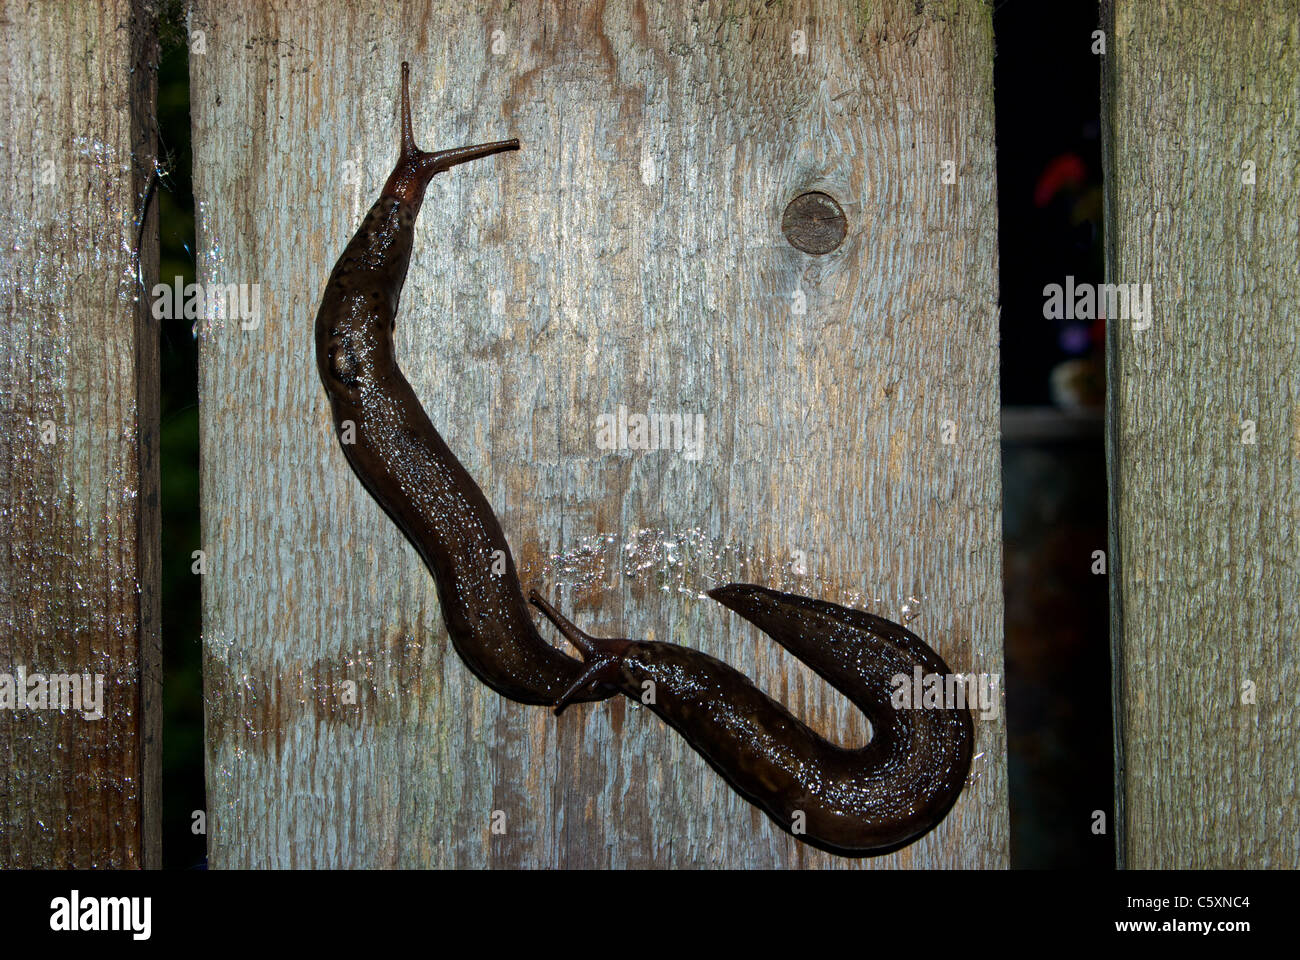 Pacific banana slugs mating on wooden board Stock Photo